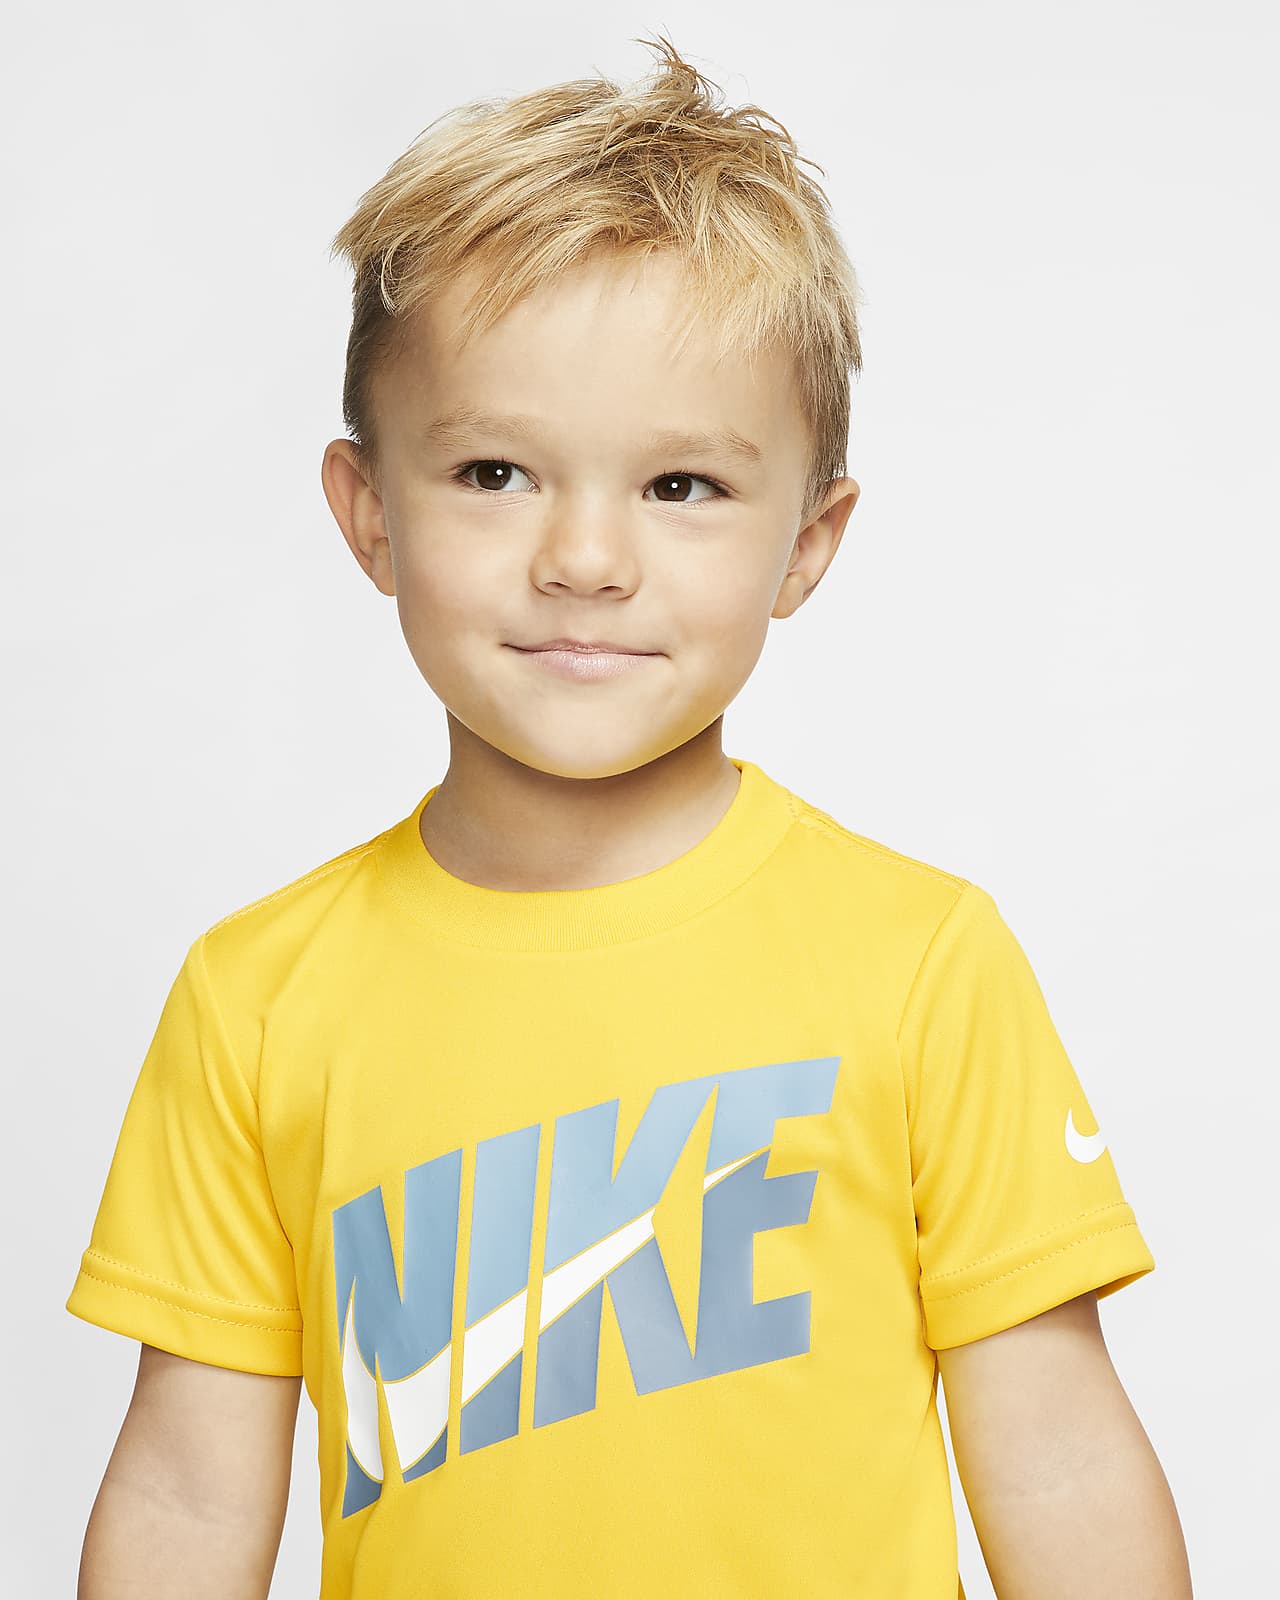 Nike Dri-FIT Toddler T-Shirt and Shorts Set. Nike.com